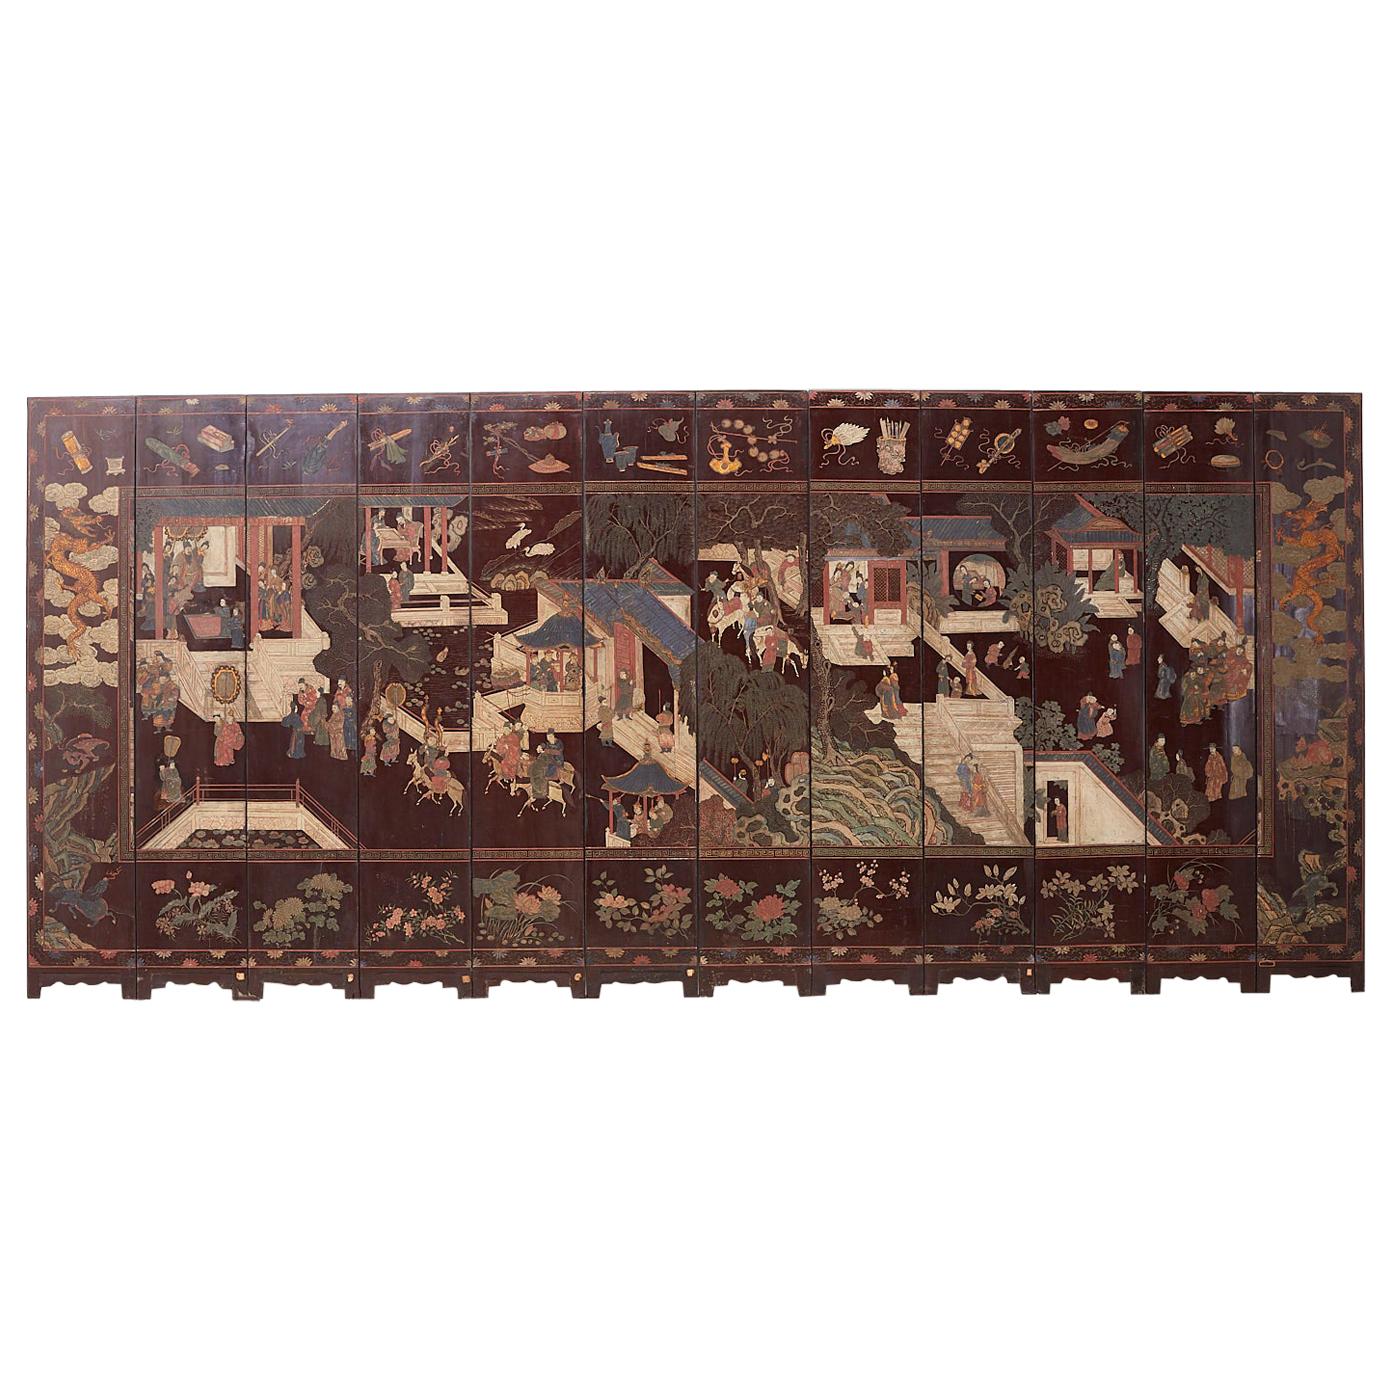 Chinese Qing Dynasty Twelve-Panel Coromandel Screen